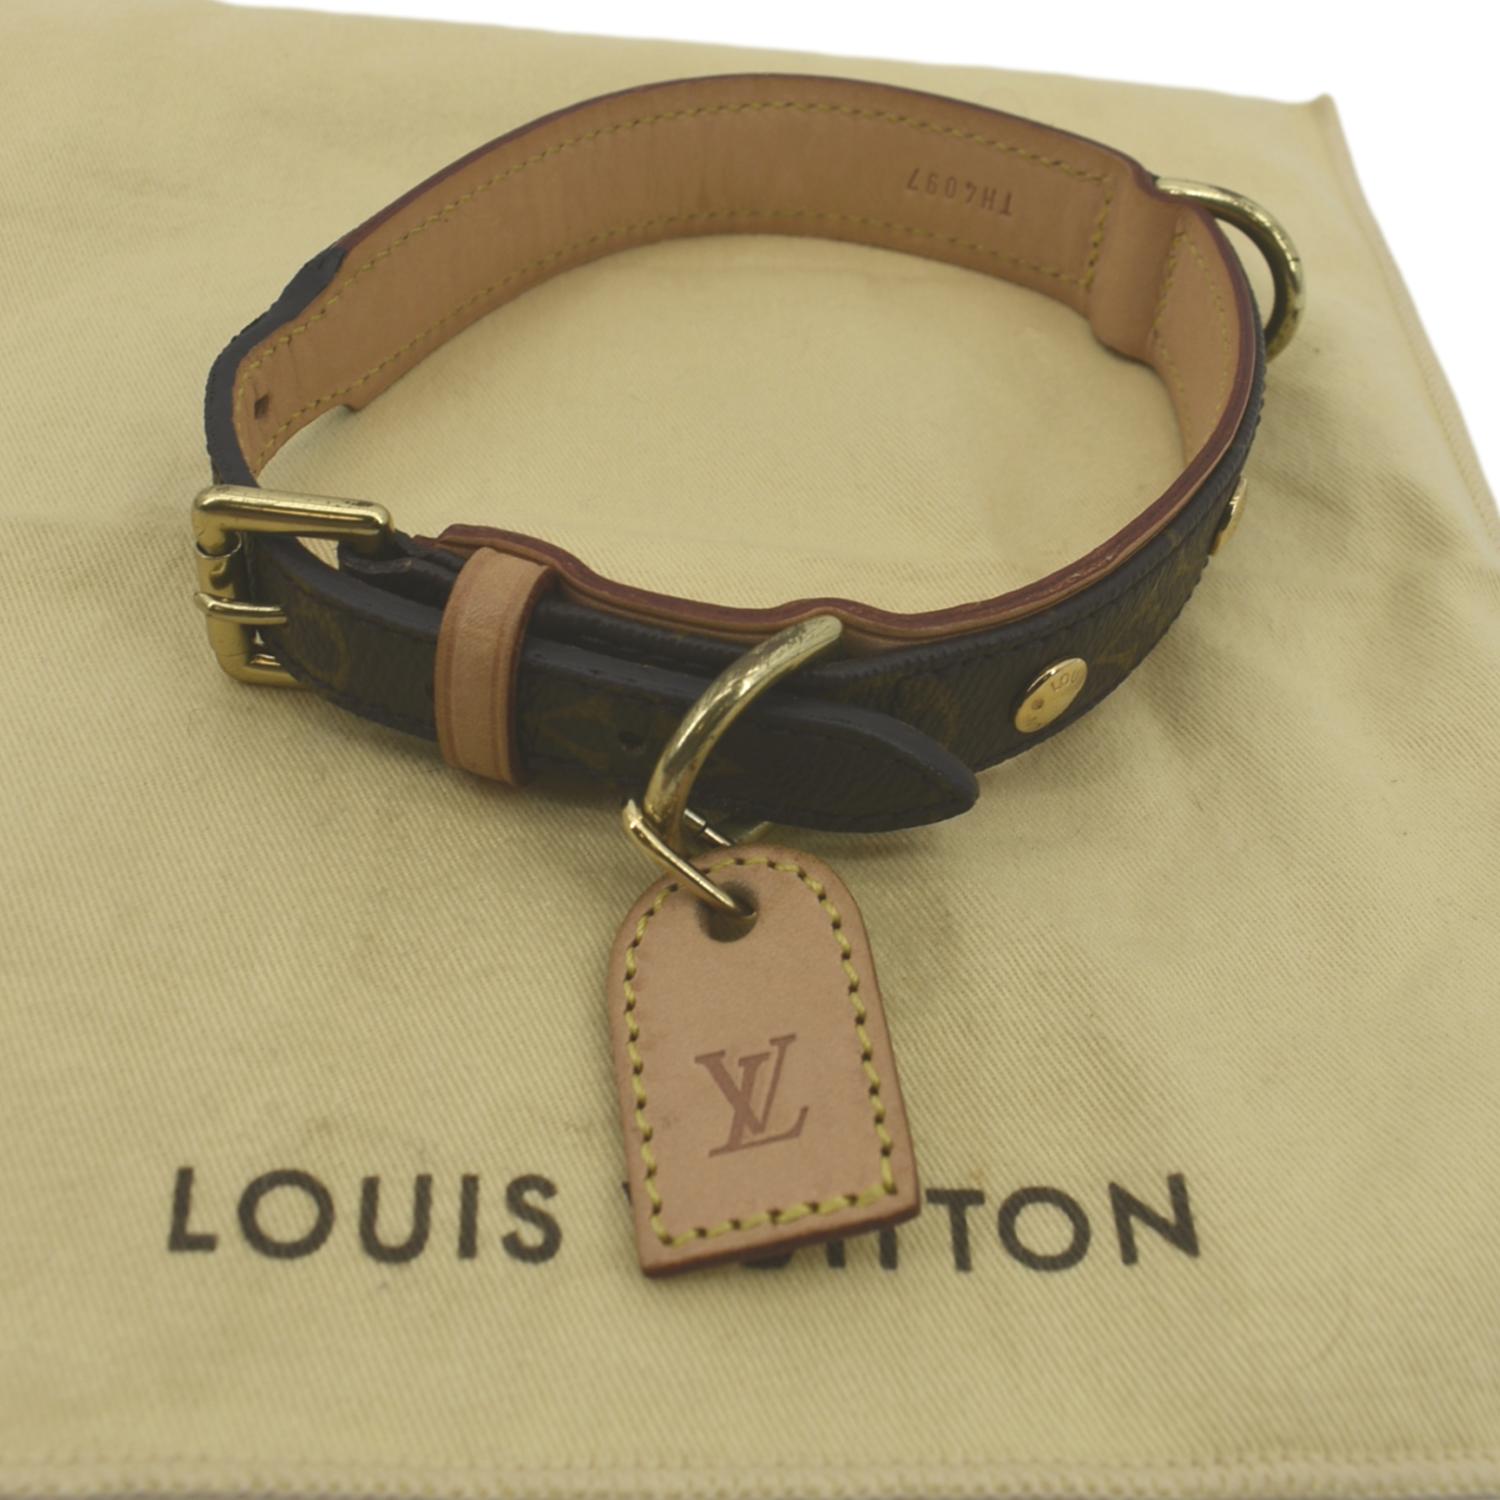 Louis Vuitton, Other, Louis Vuitton Leather Dog Collar